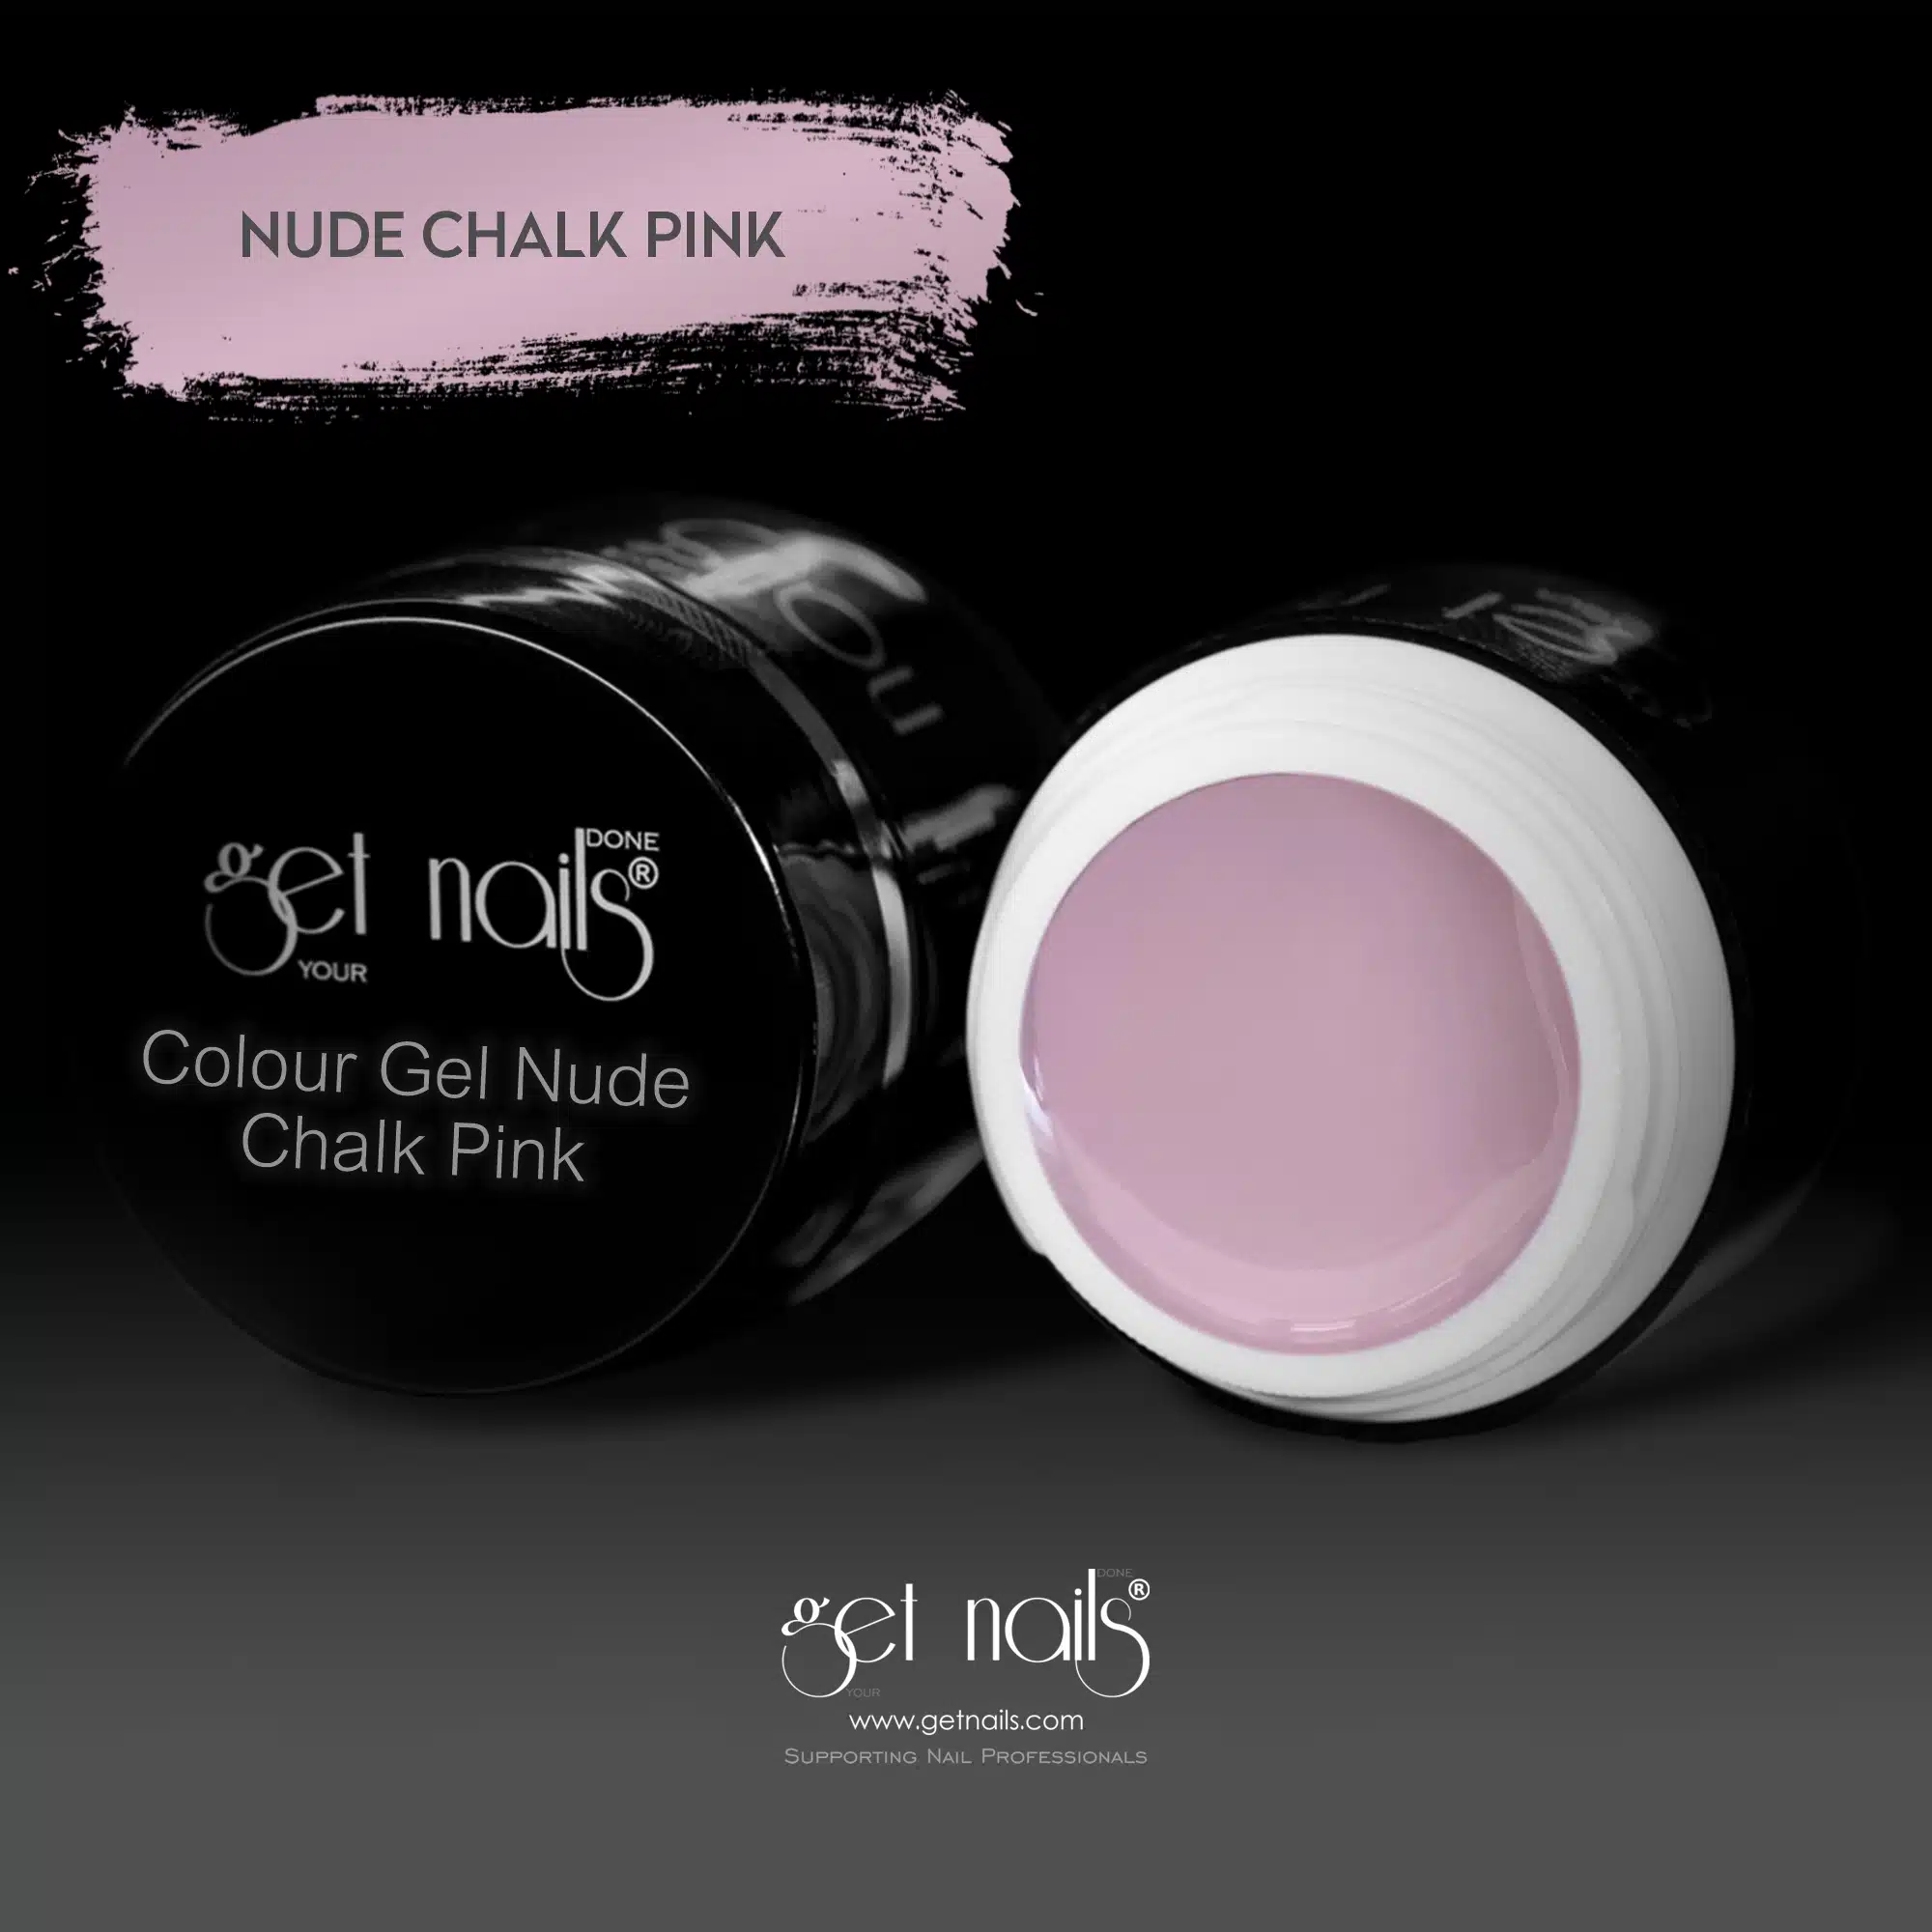 Get Nails Austria - Gel colorato Nude Chalk Pink 5g